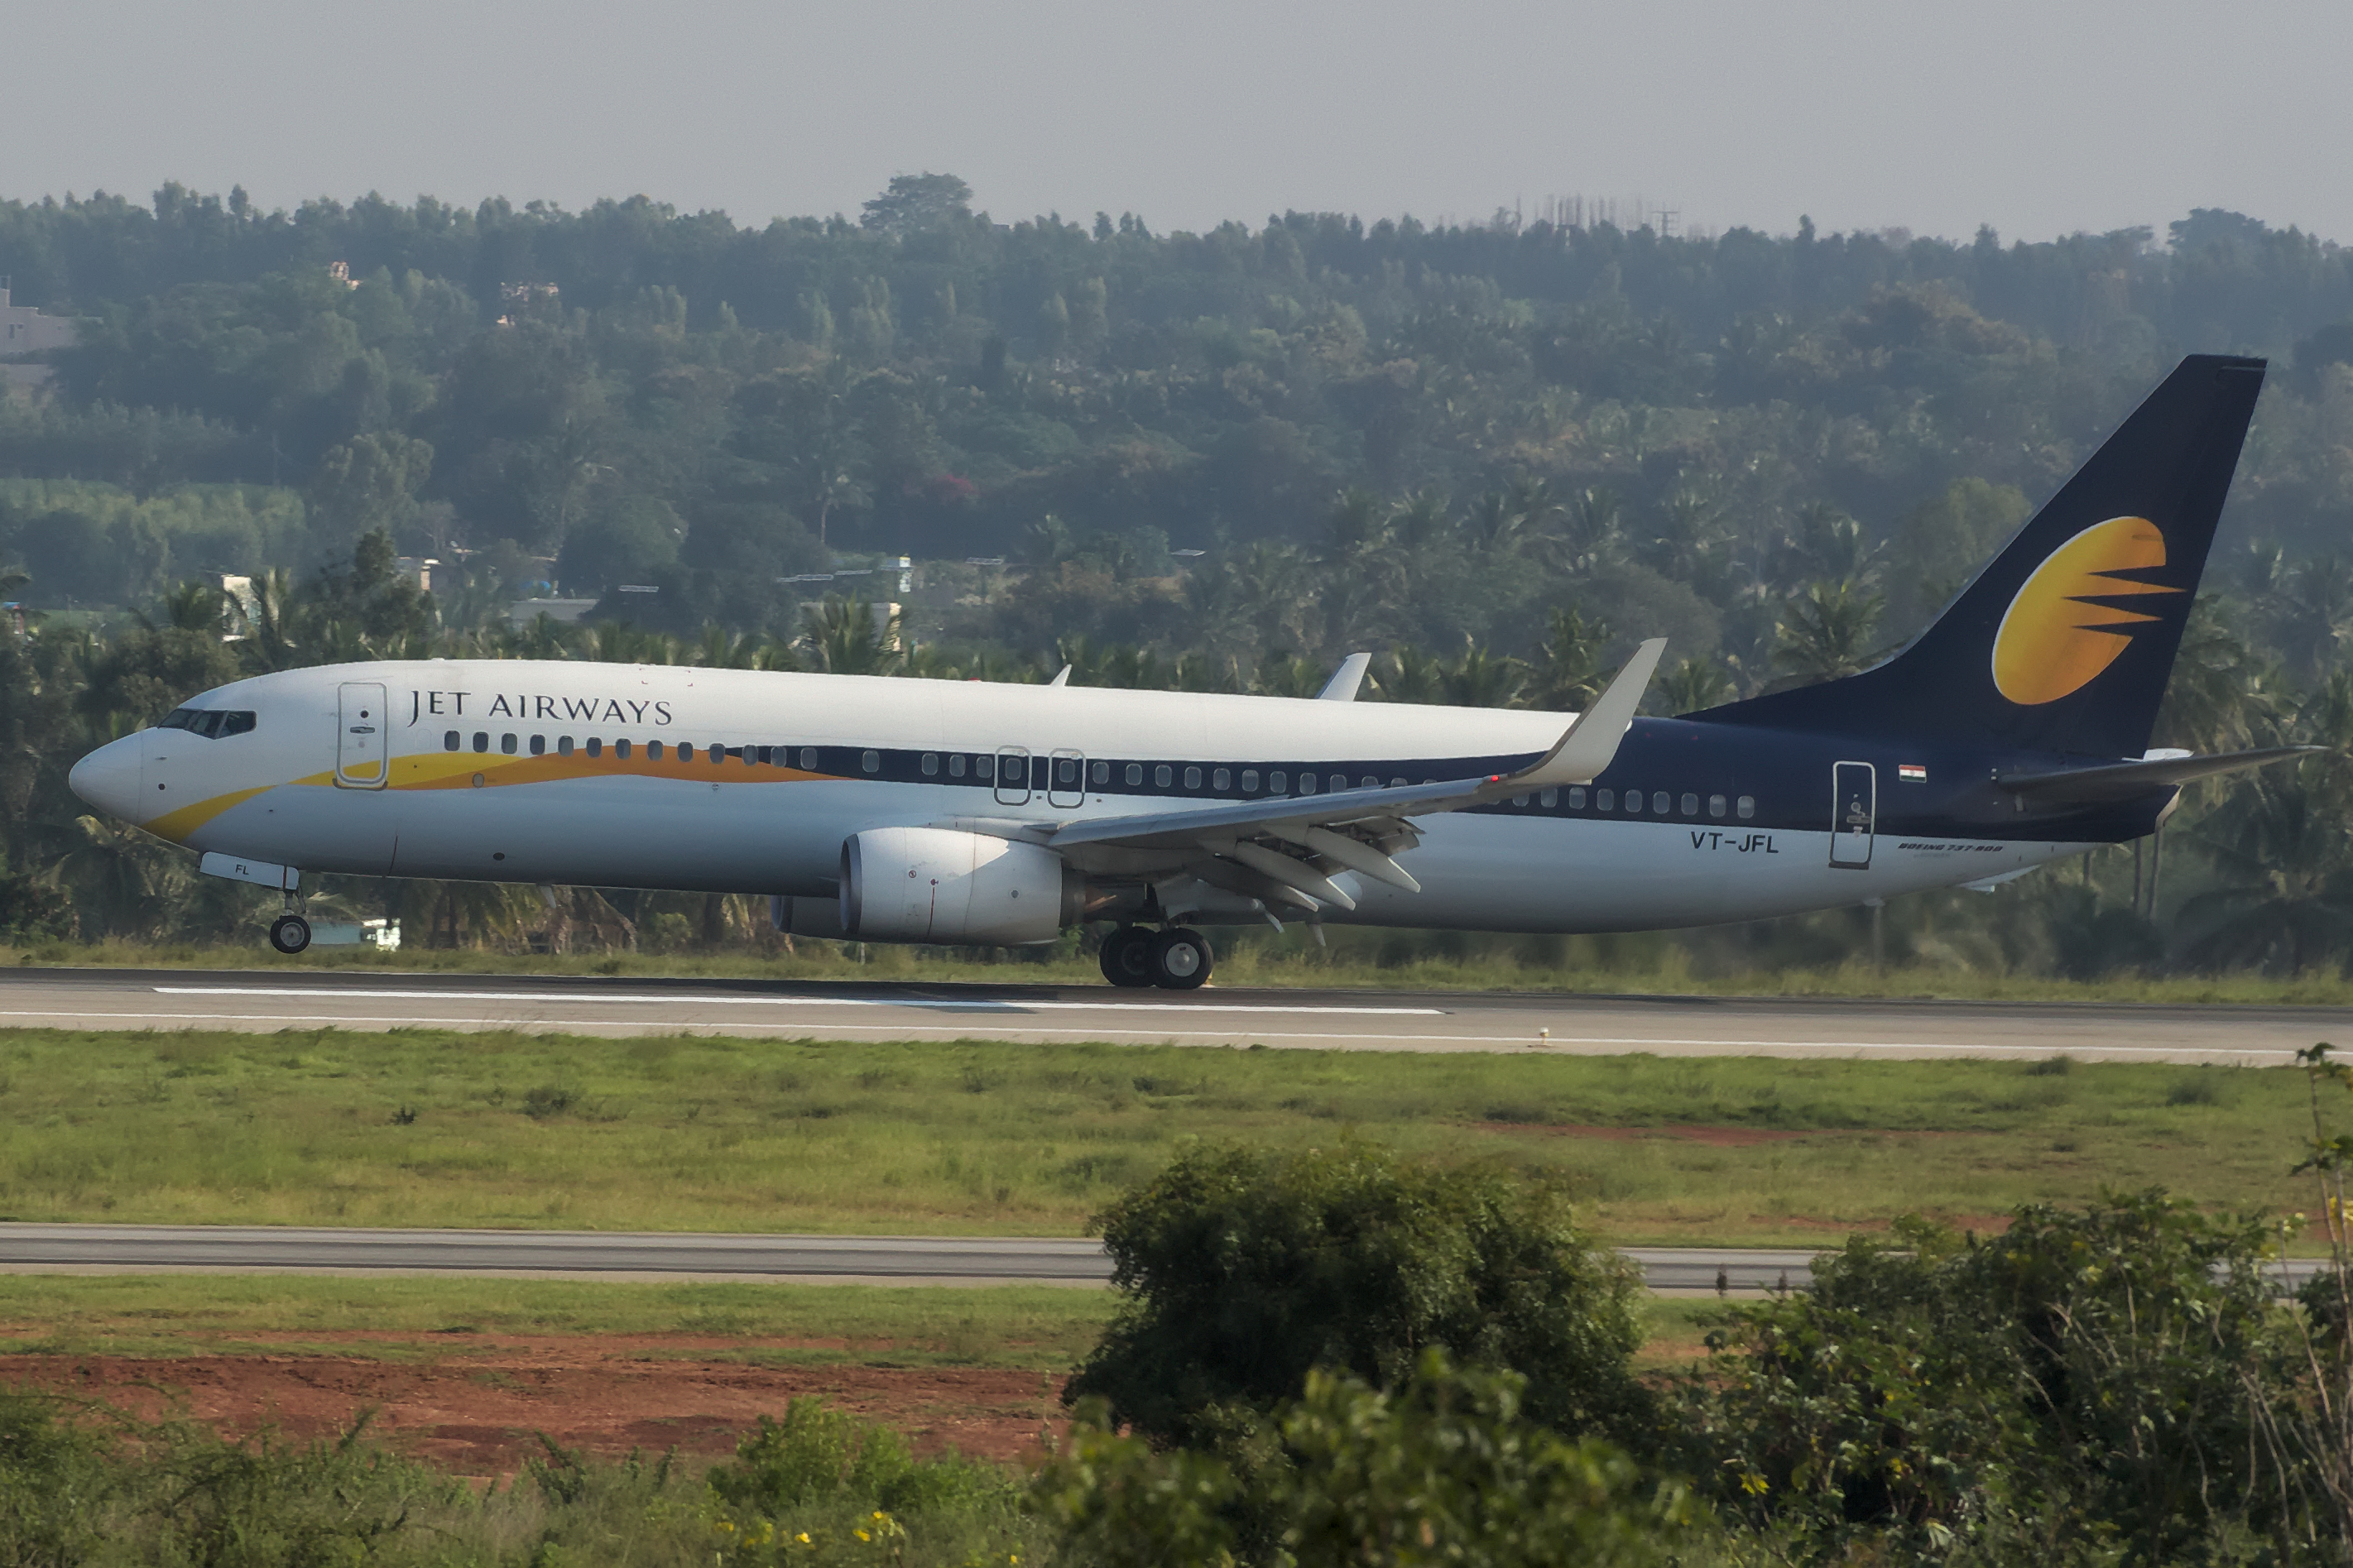 File Jet Airways Vt Jfl At Bangalore Sept 15 Jpg Wikimedia Commons